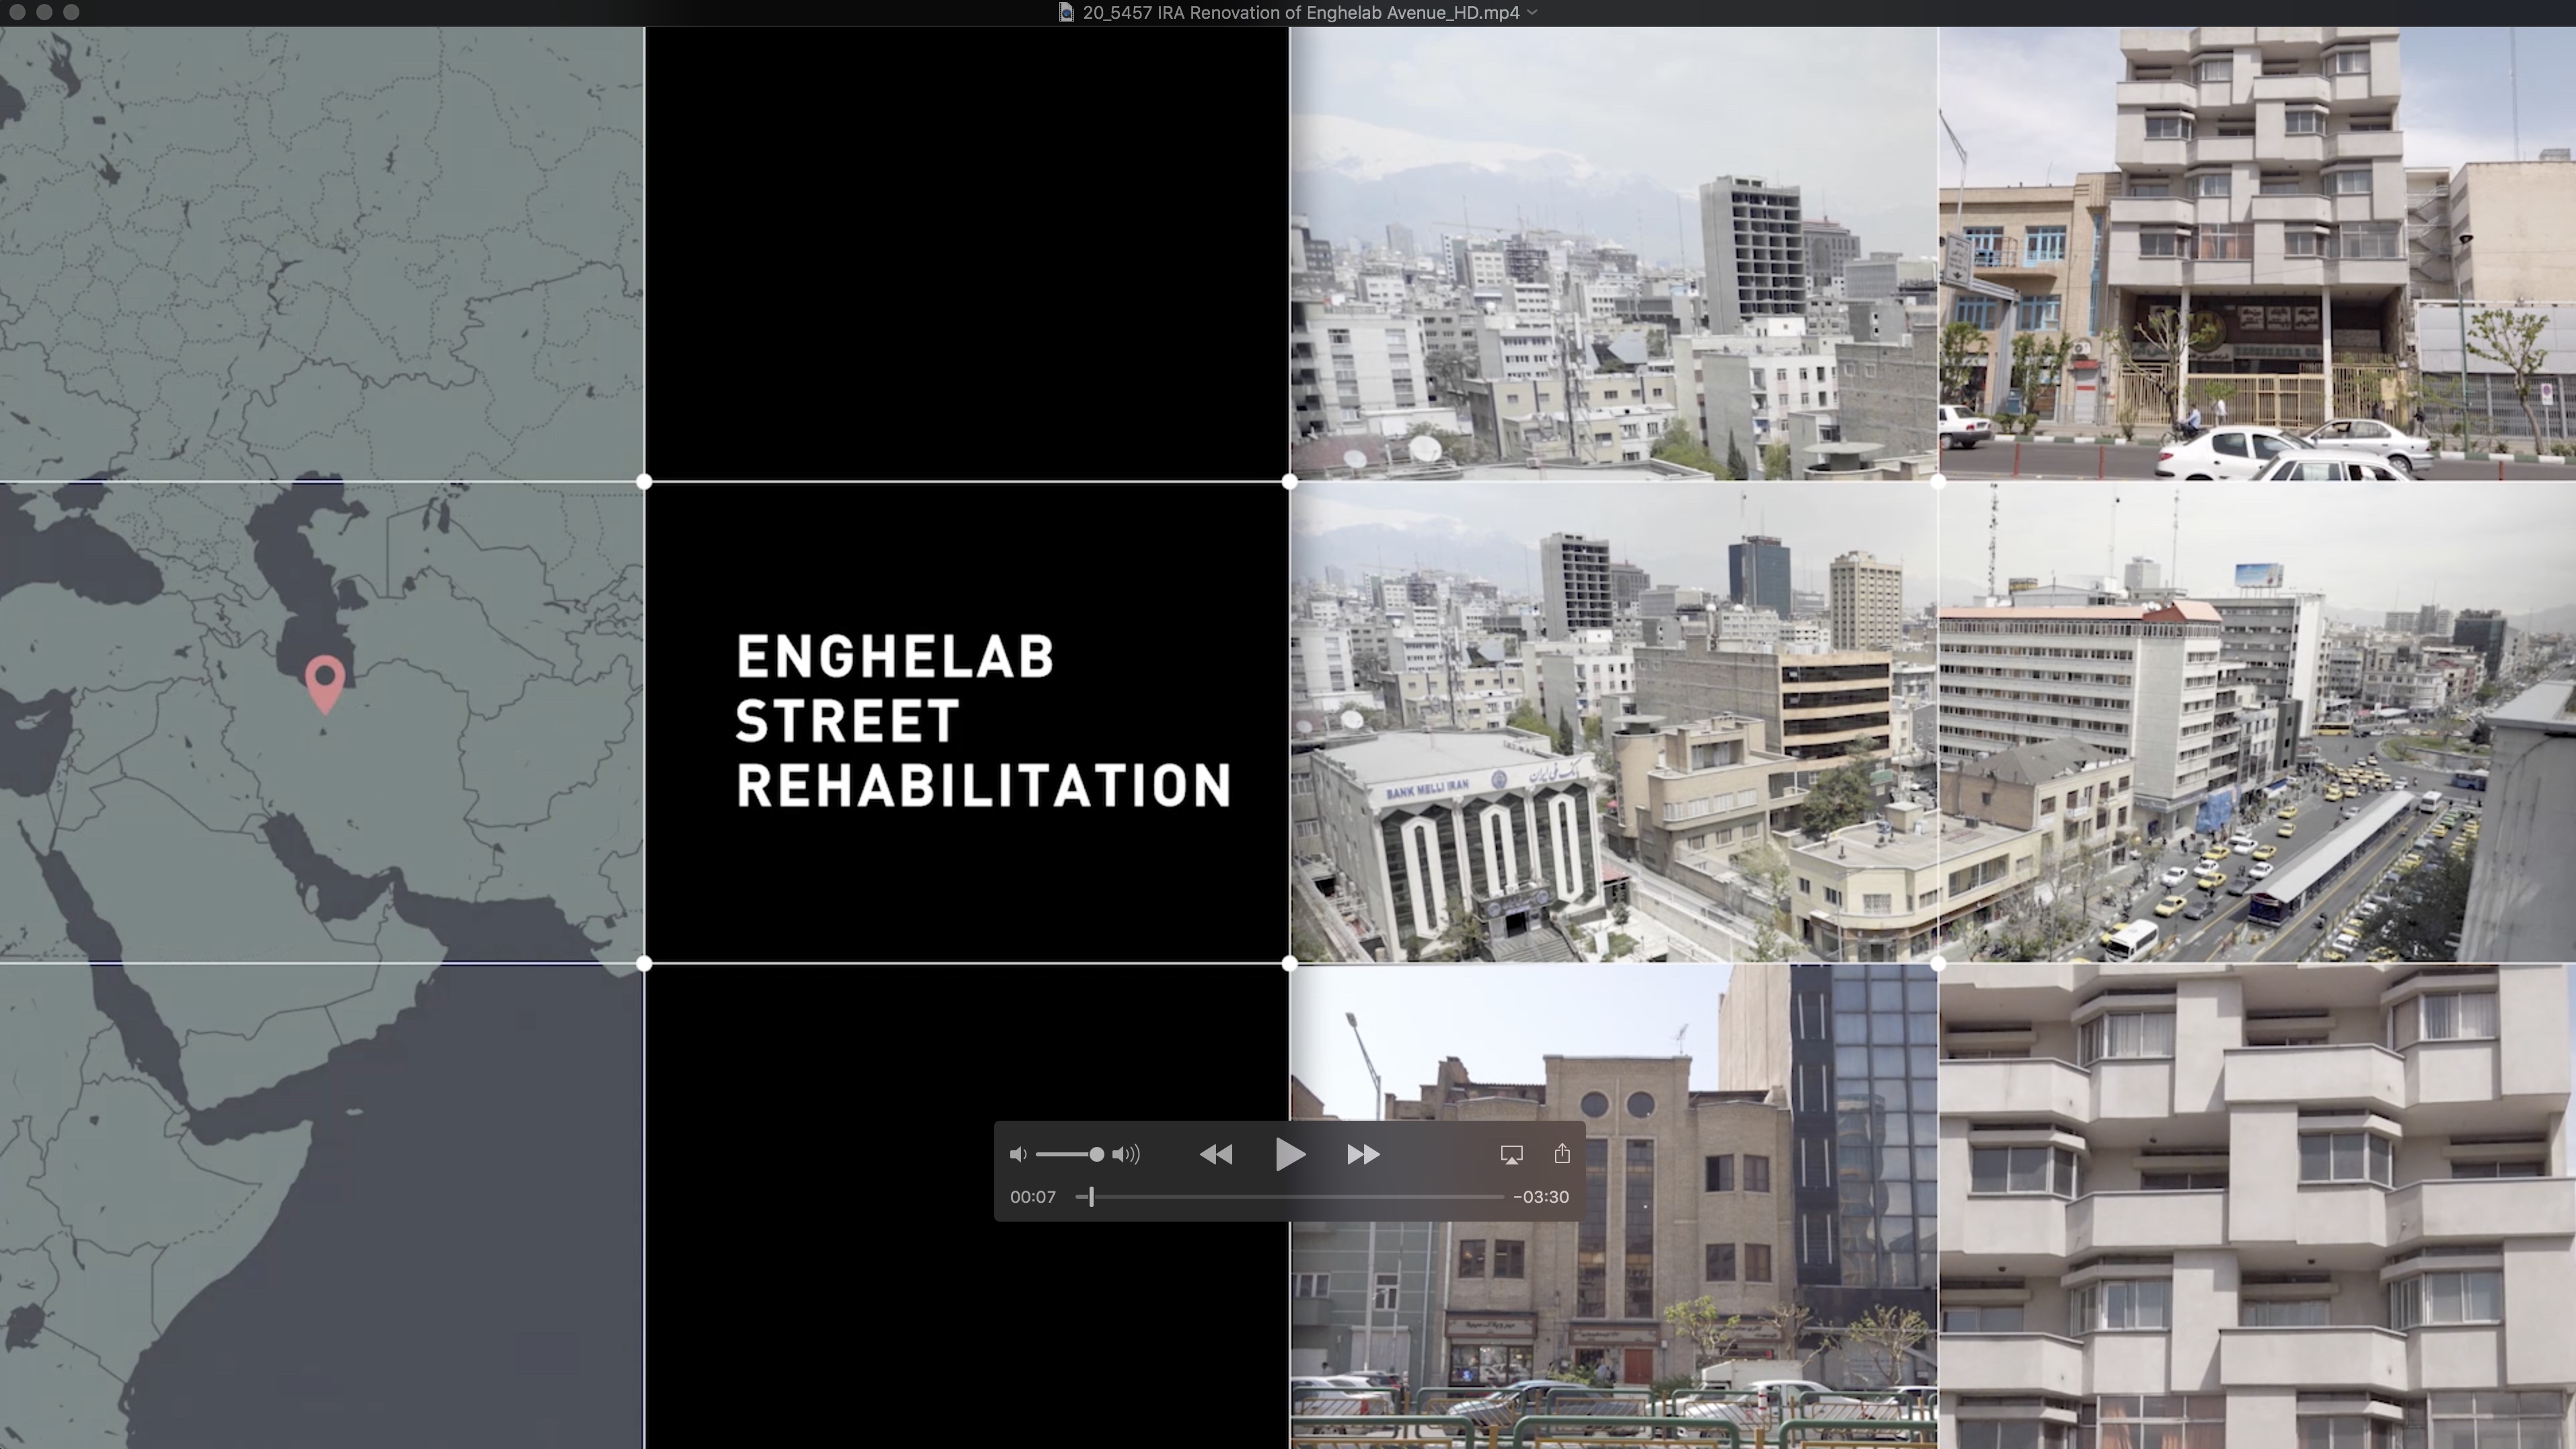 Enghelab Street Rehabilitation - Video Introduction to the Renovation of Enghelab Avenue